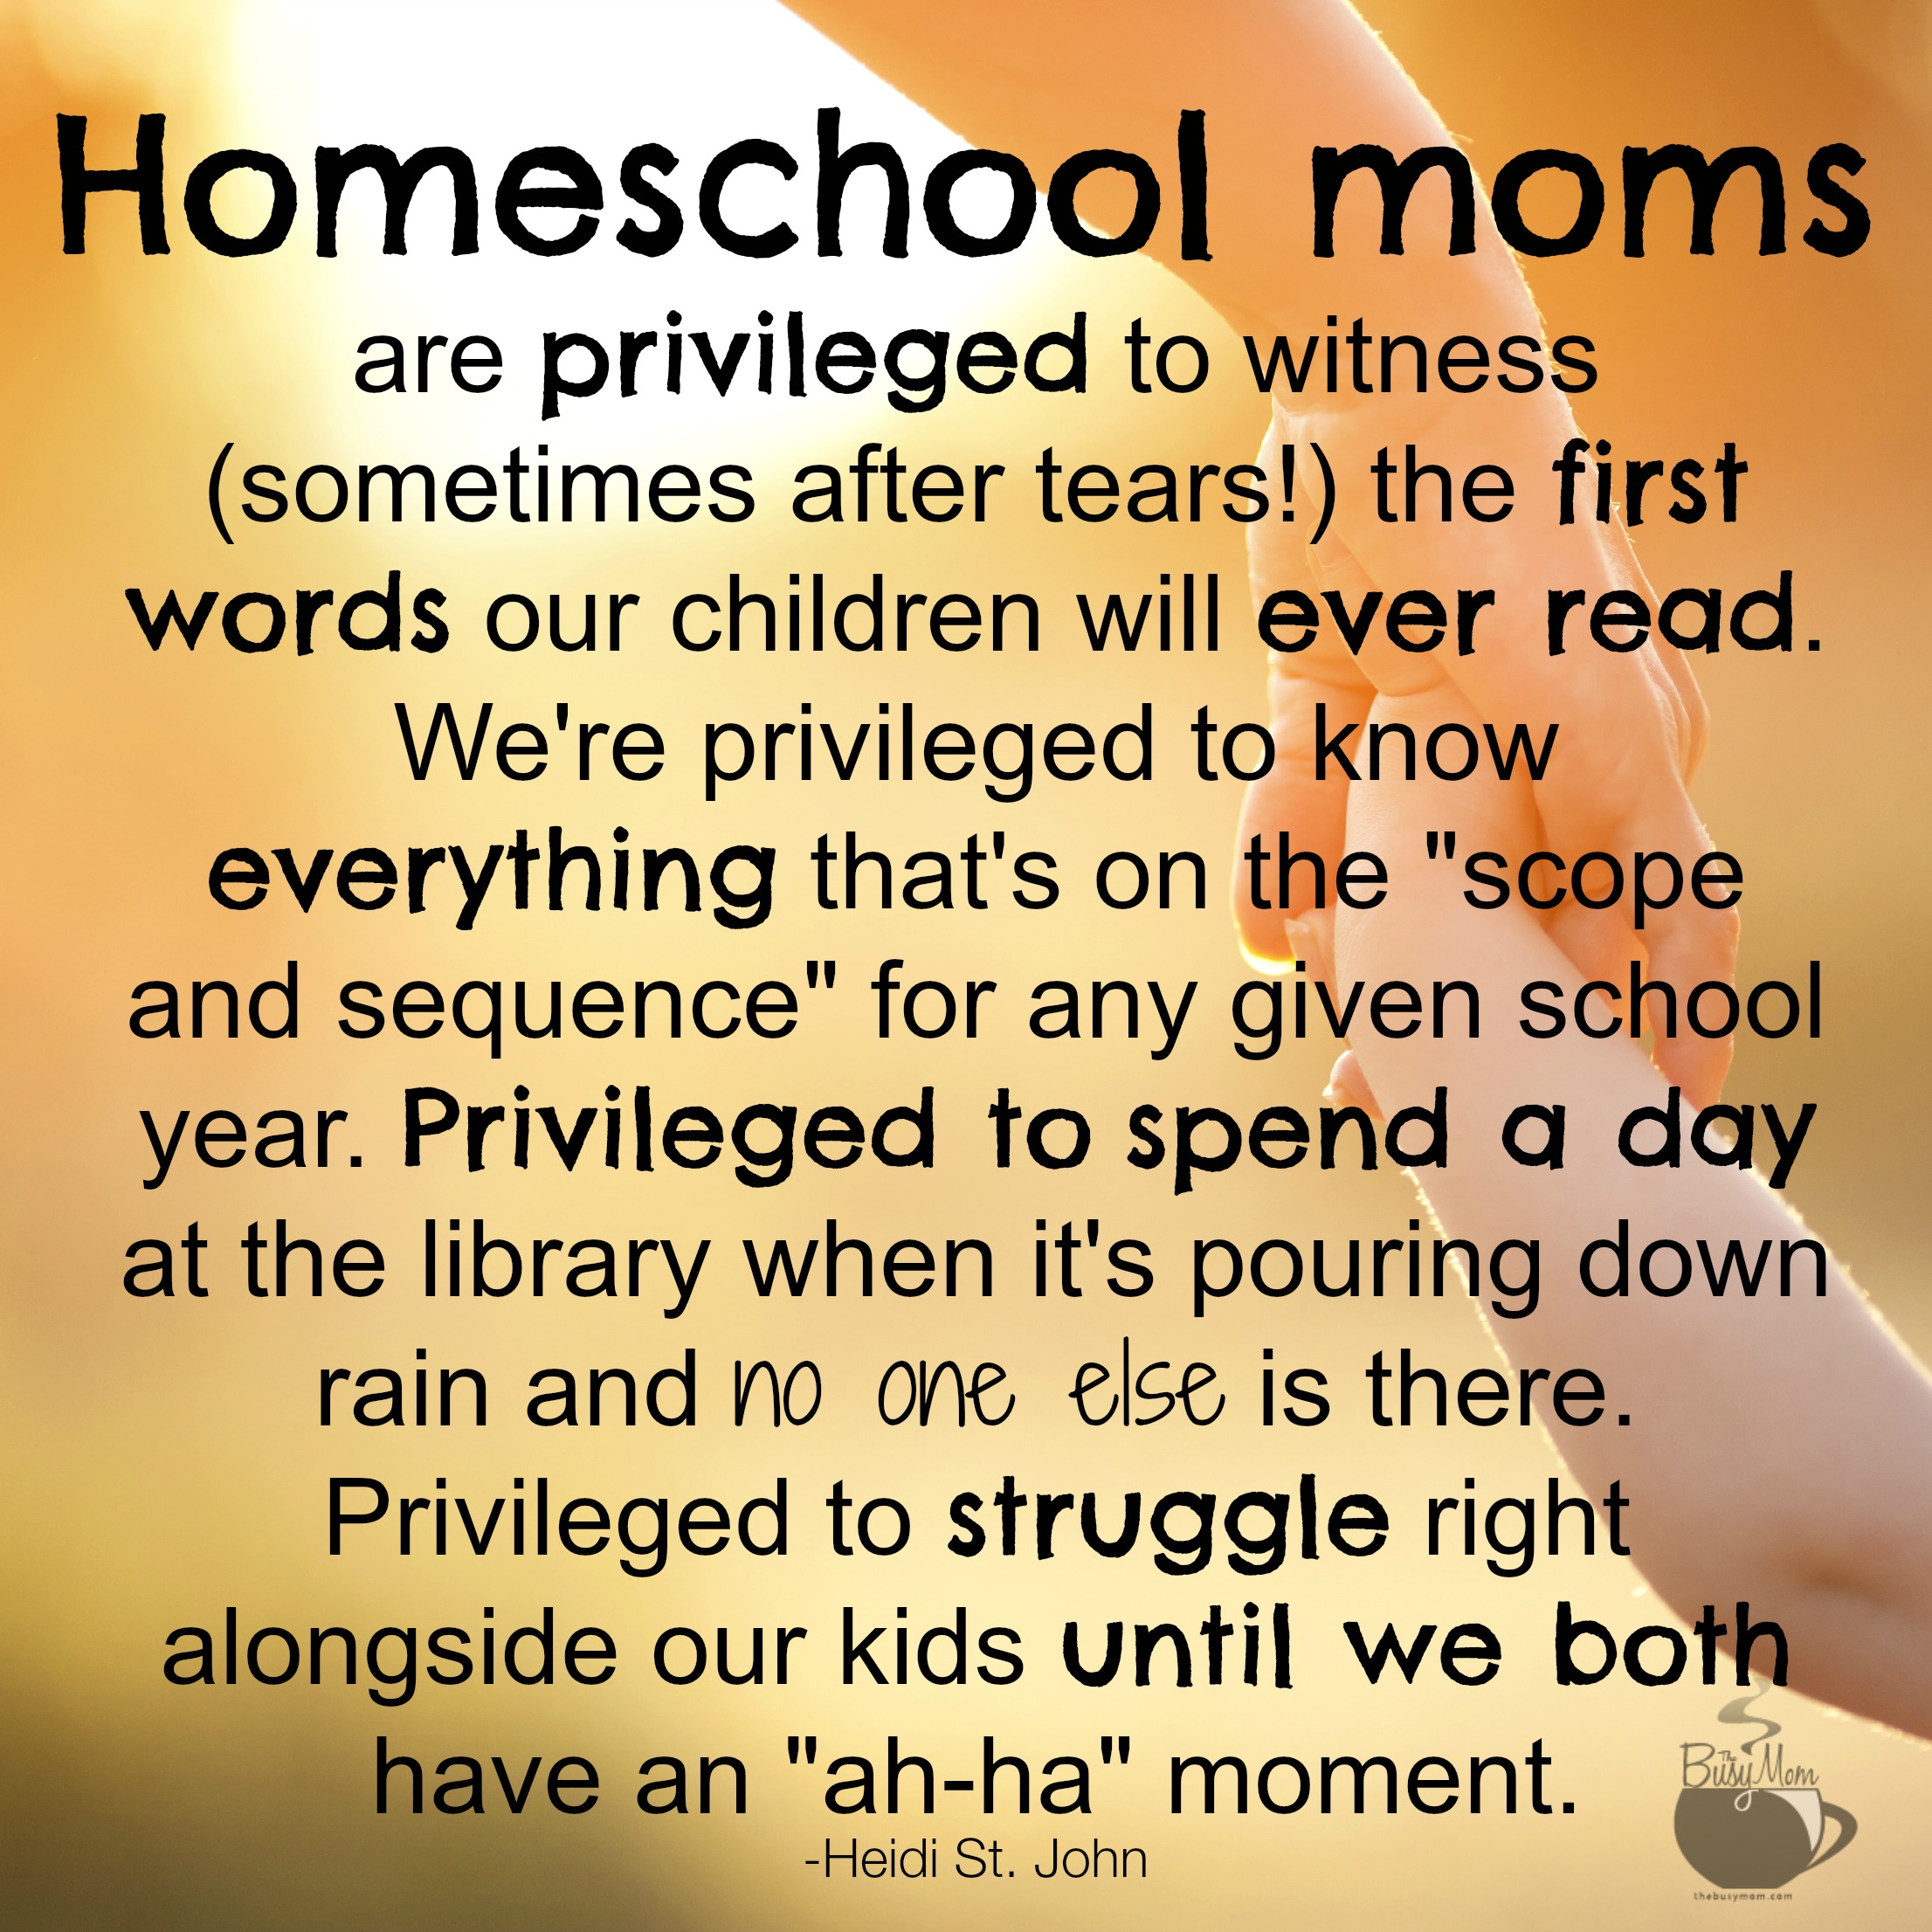 Homeschool moms are privileged! mid-summer homeschool prep.